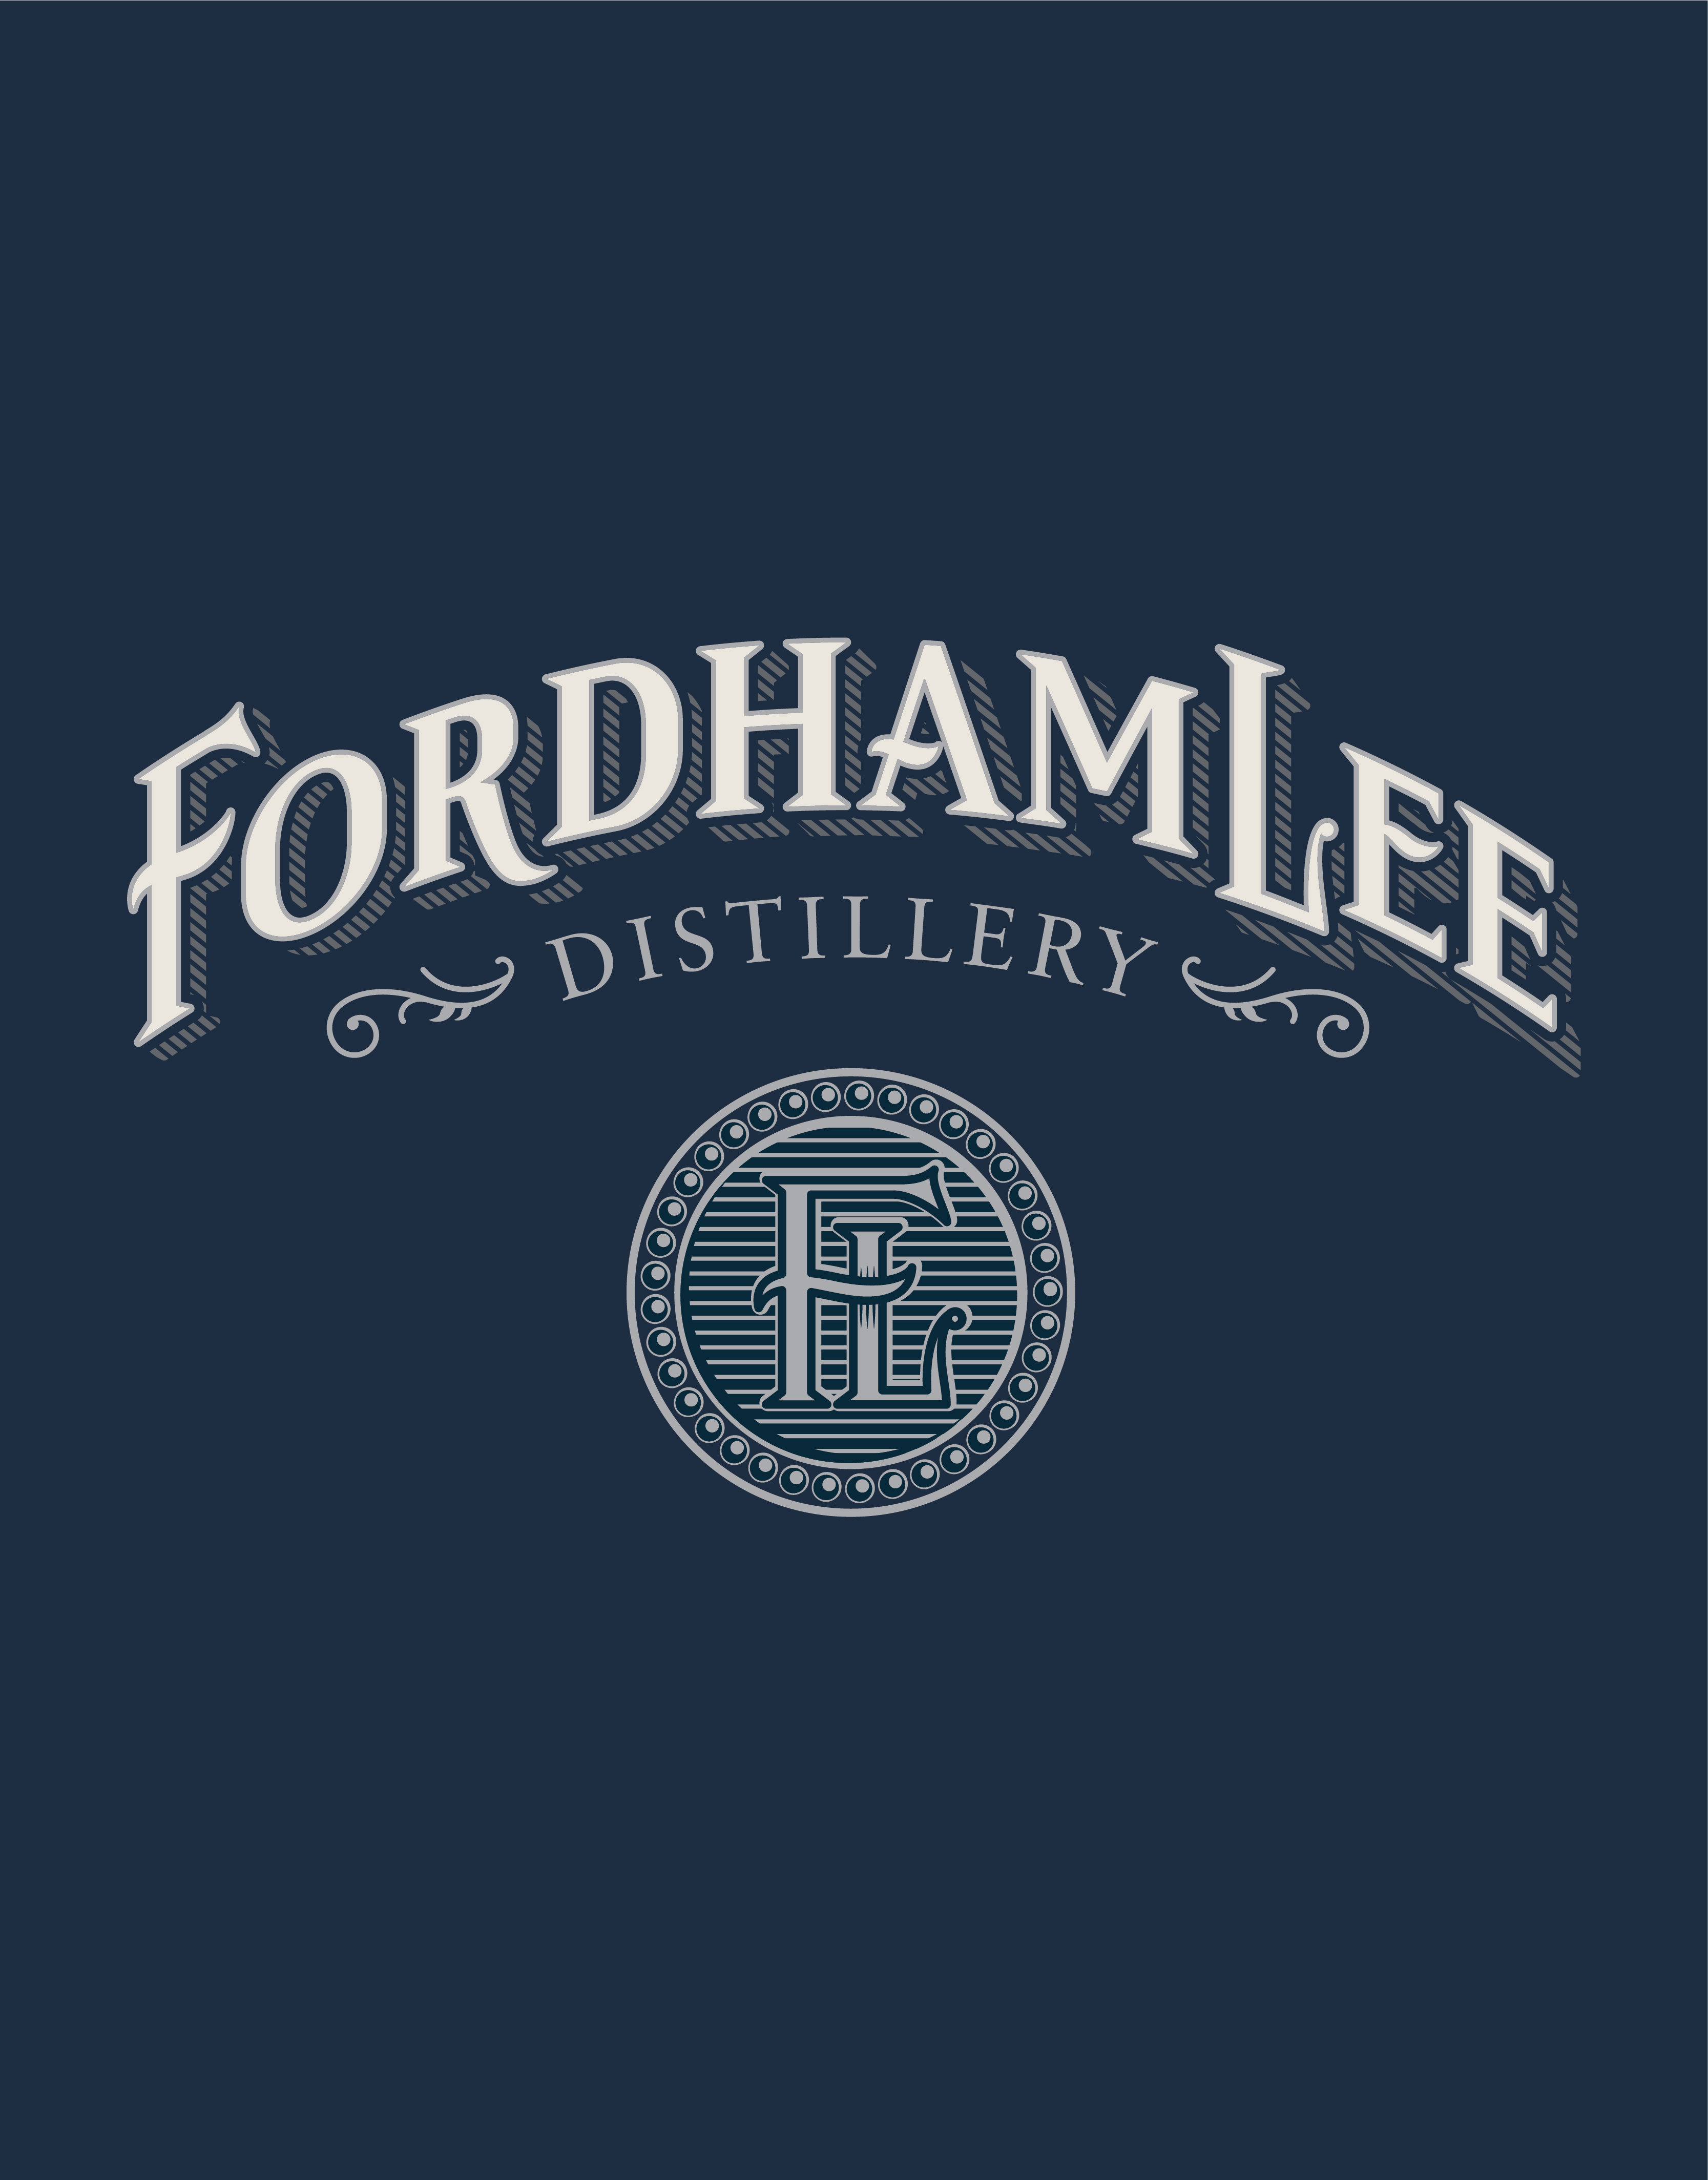 Fordham Lee Distillery Logo Design